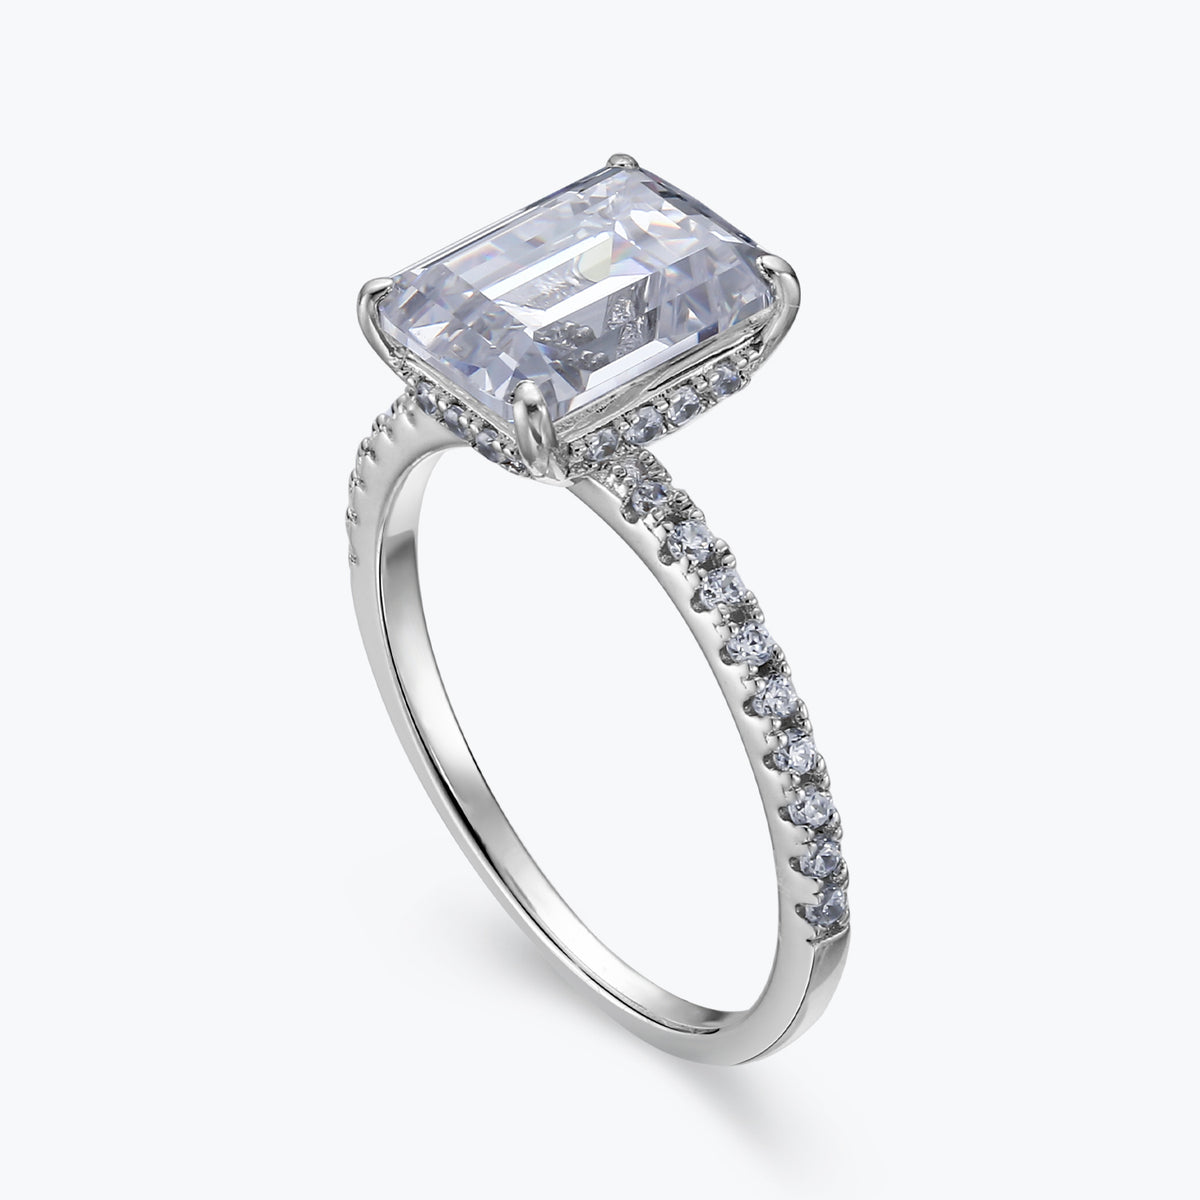 Dissoo® 3ct Diamond White Emerald Cut Sterling Silver Ring